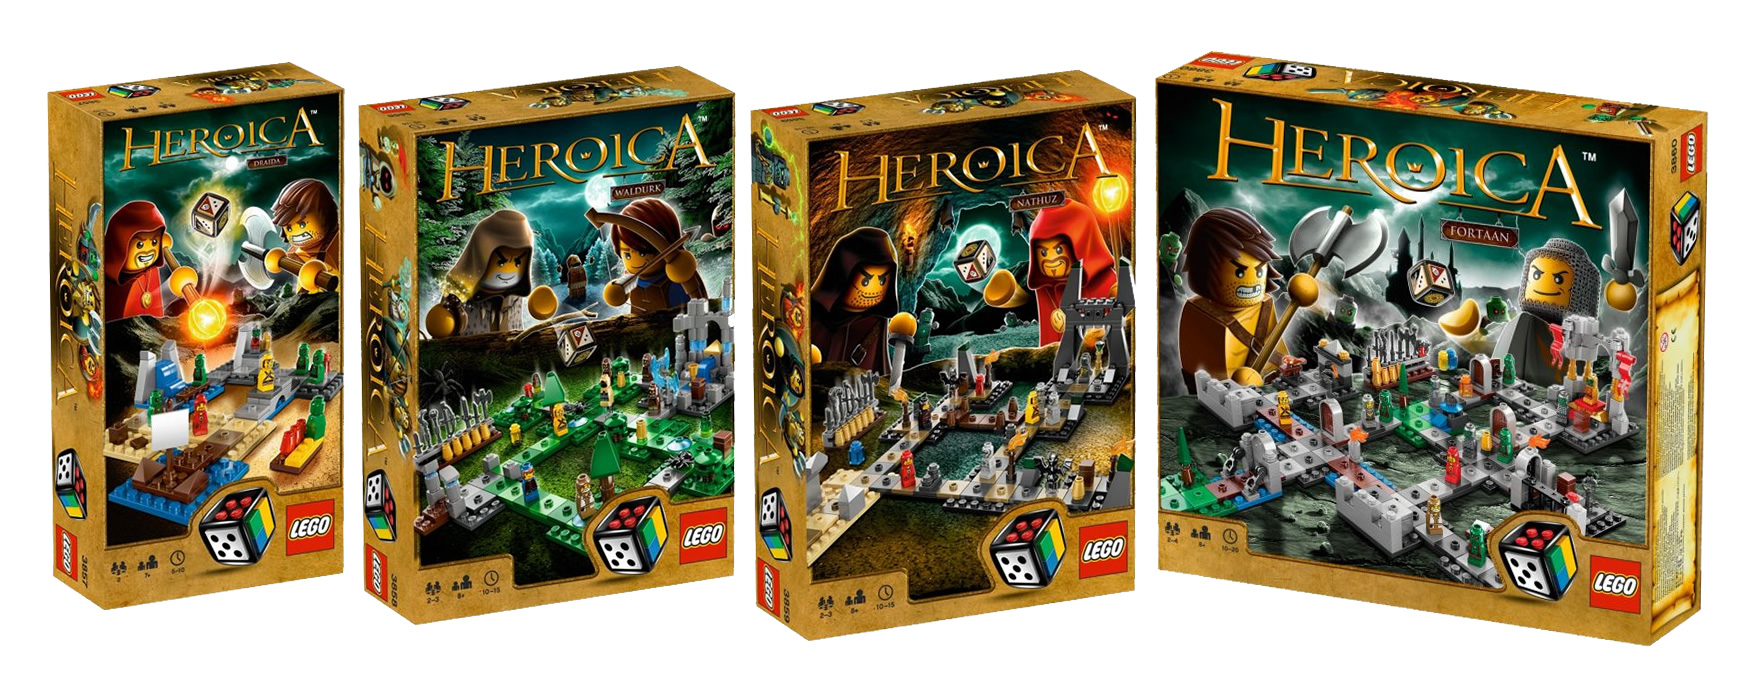 http://www.maxoe.com/img/uploads/2012/08/110323_LEGO_Heroica_Boxes_Large.jpg